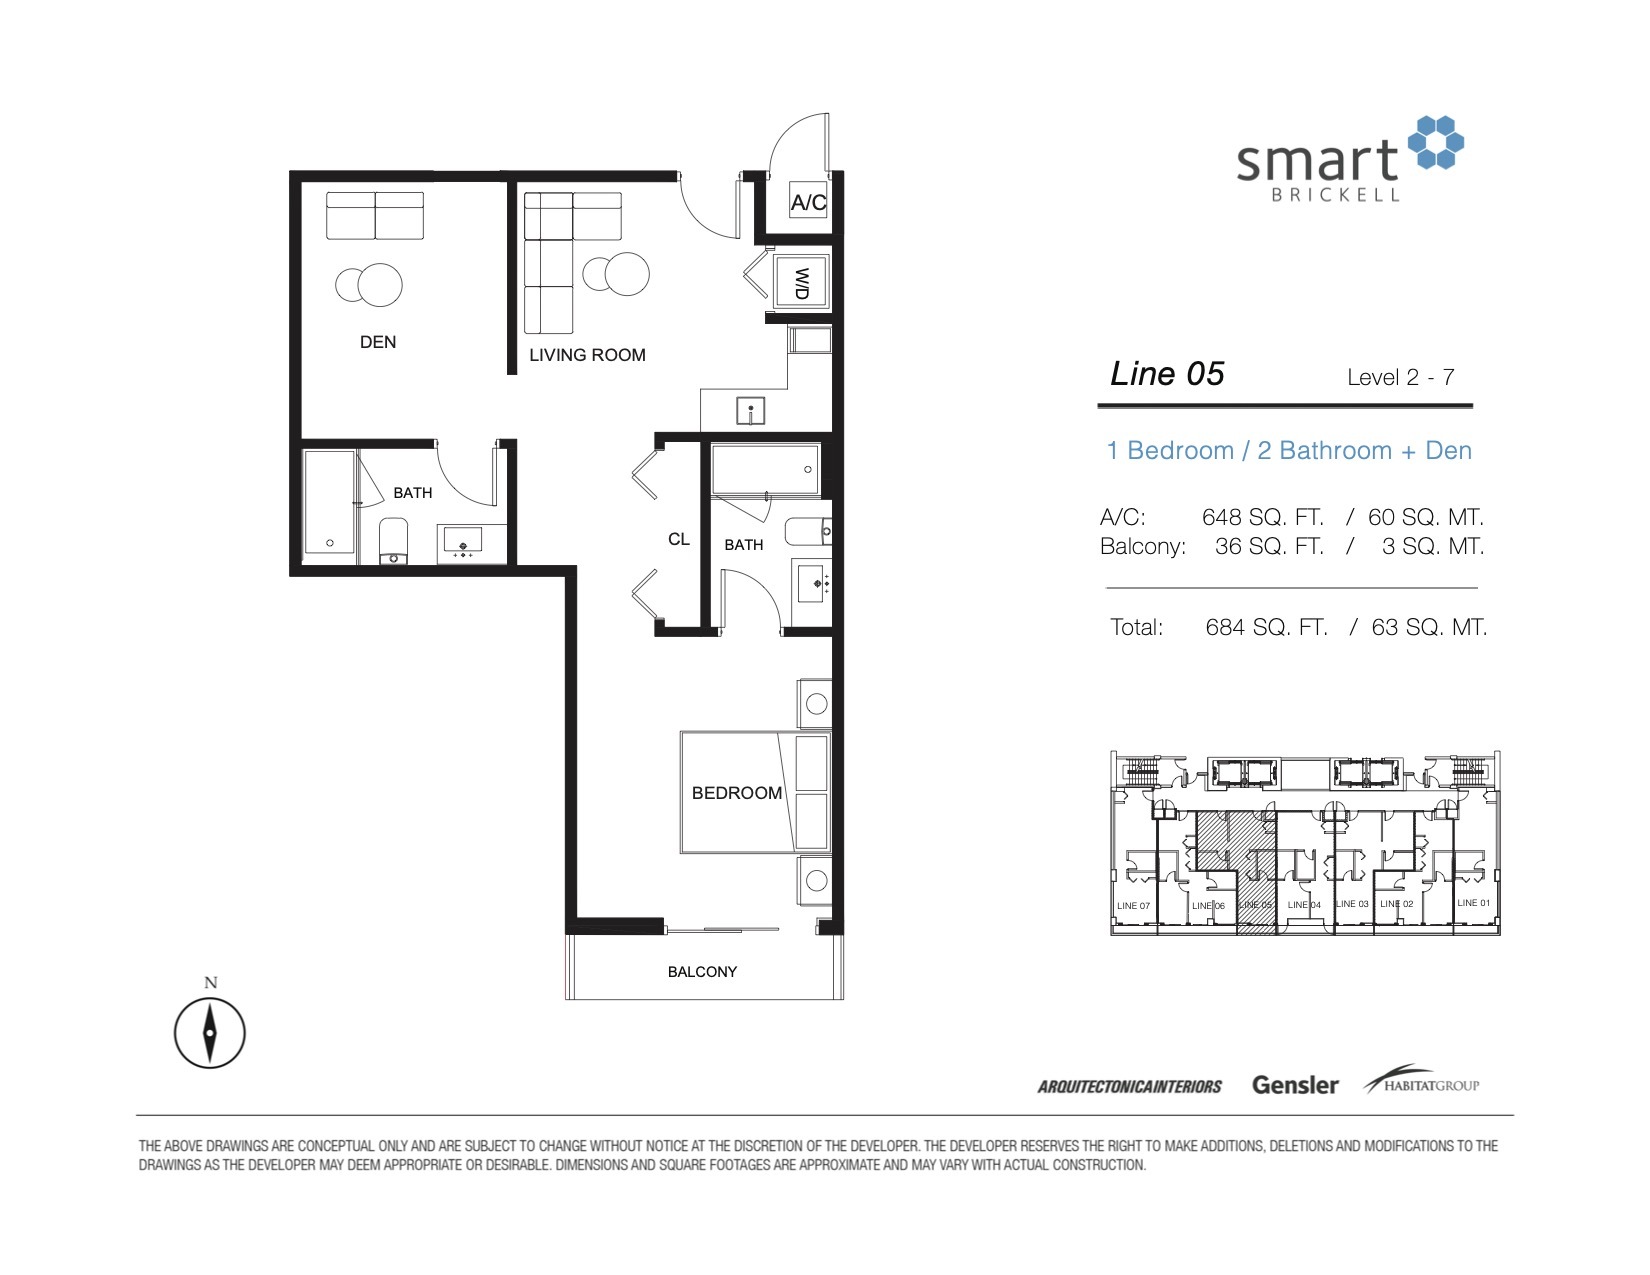 Floor Plan for Smart Brickell Floorplans, Line 05 Level 2-7